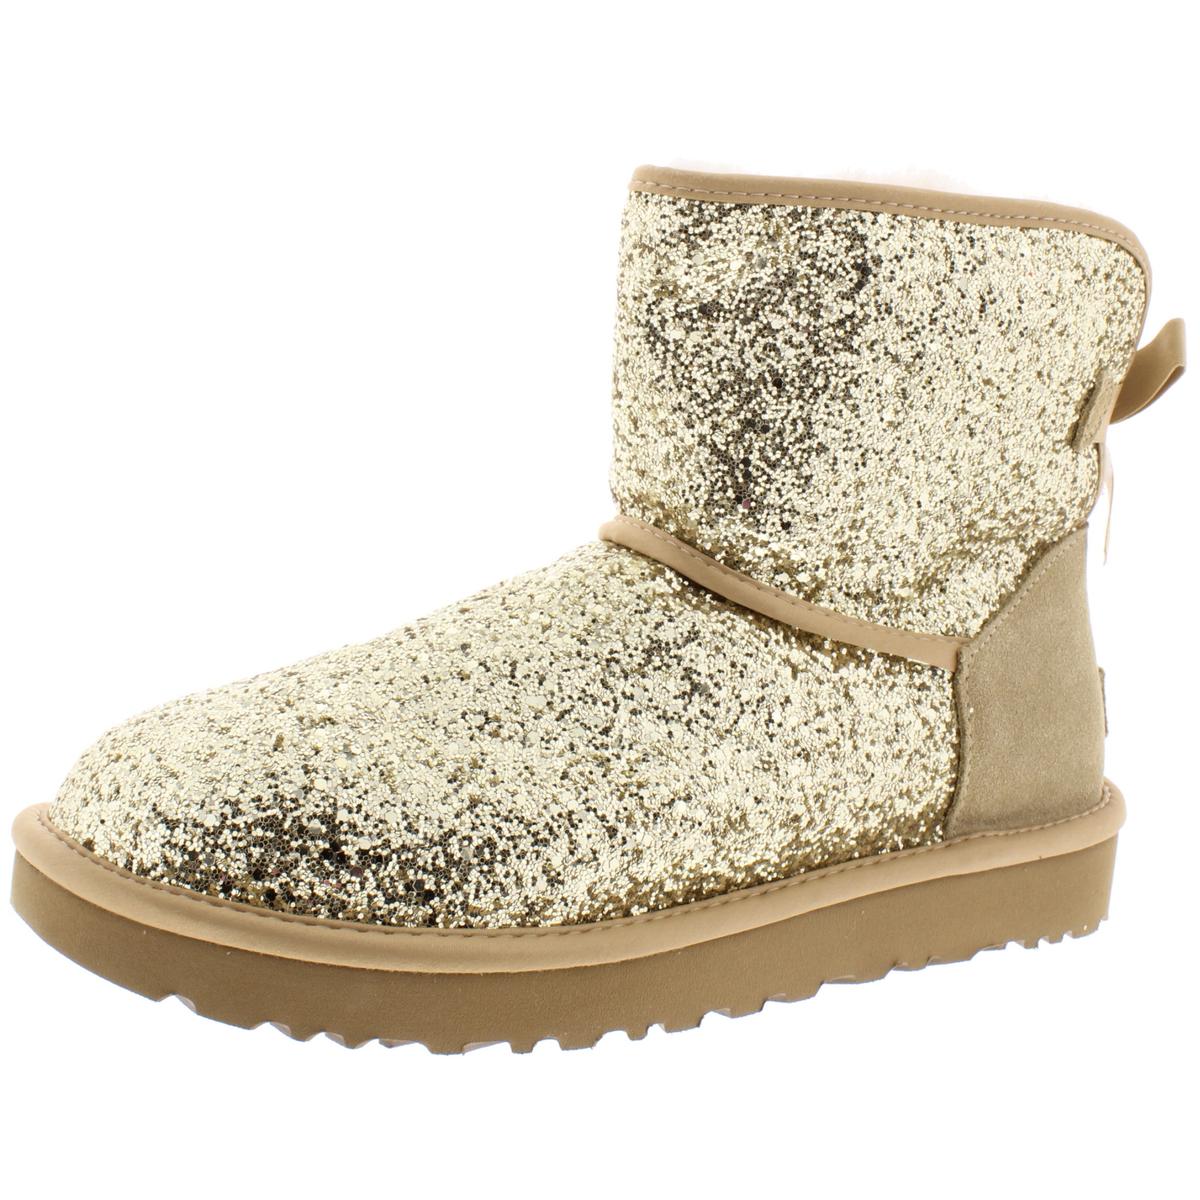 Ugg Womens Mini Bow Cosmos Gold Winter Boots Shoes 5 Medium (B,M) BHFO ...